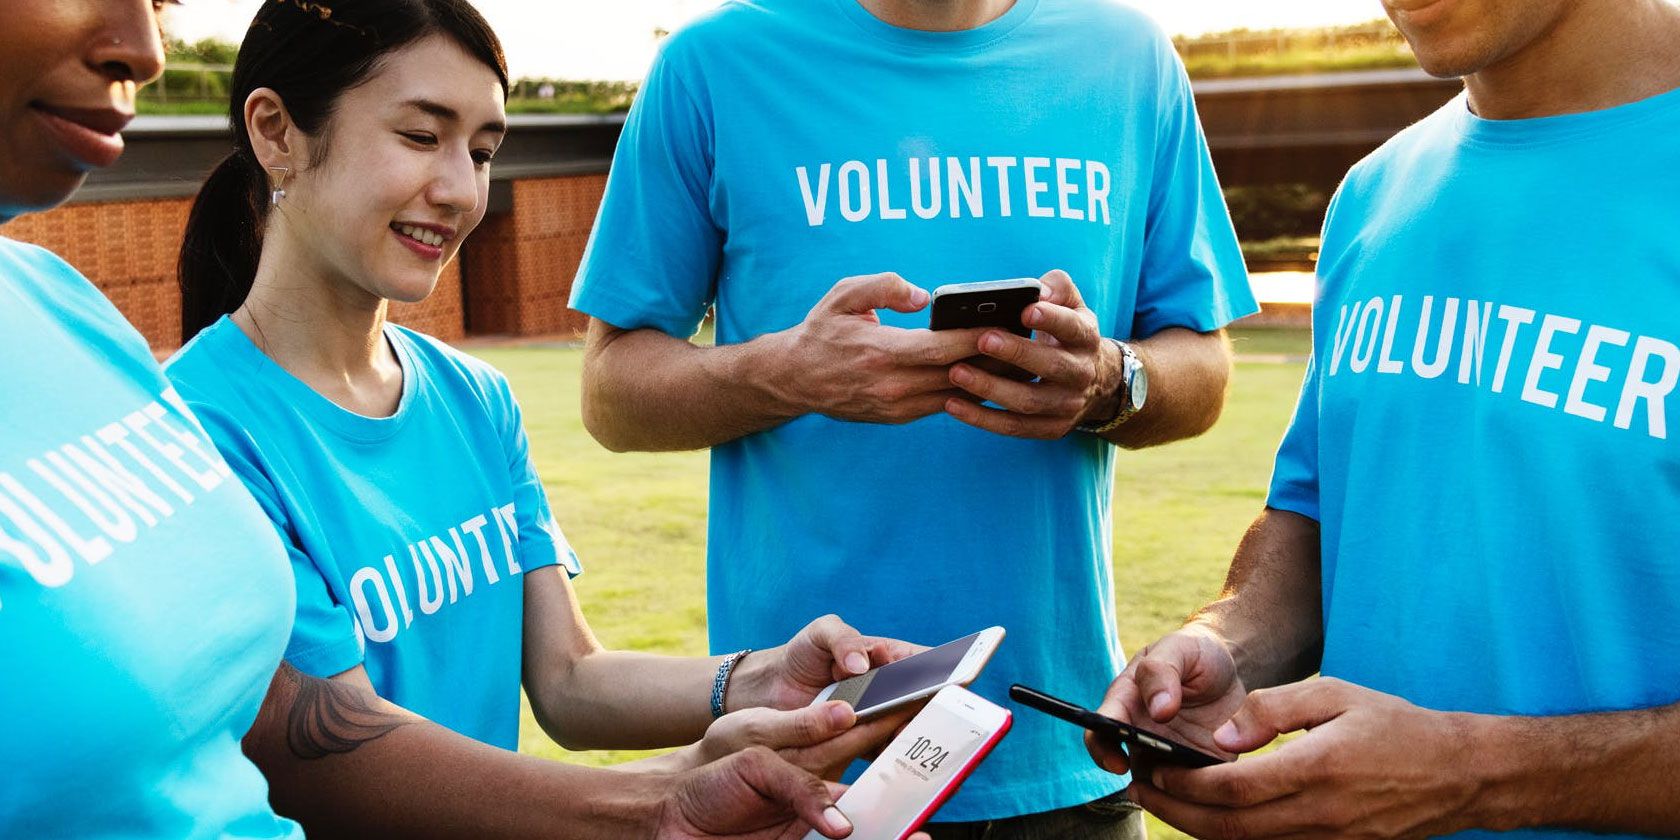 The 10 Best Websites to Find Volunteer Work and Opportunities